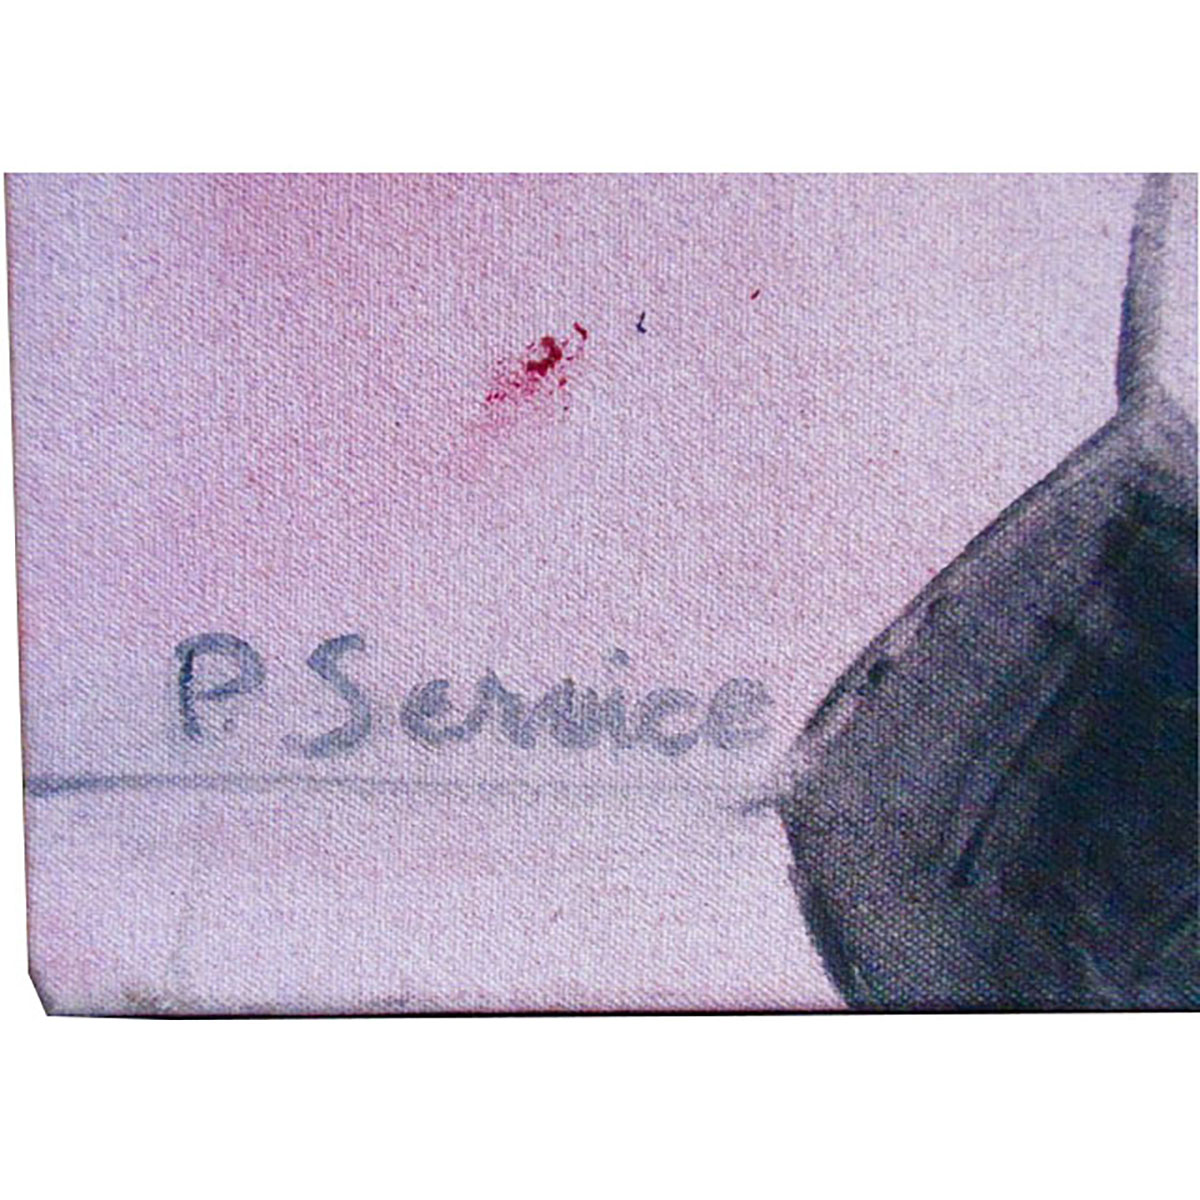 PAT SERVICE (CANADIAN, 1941-)  